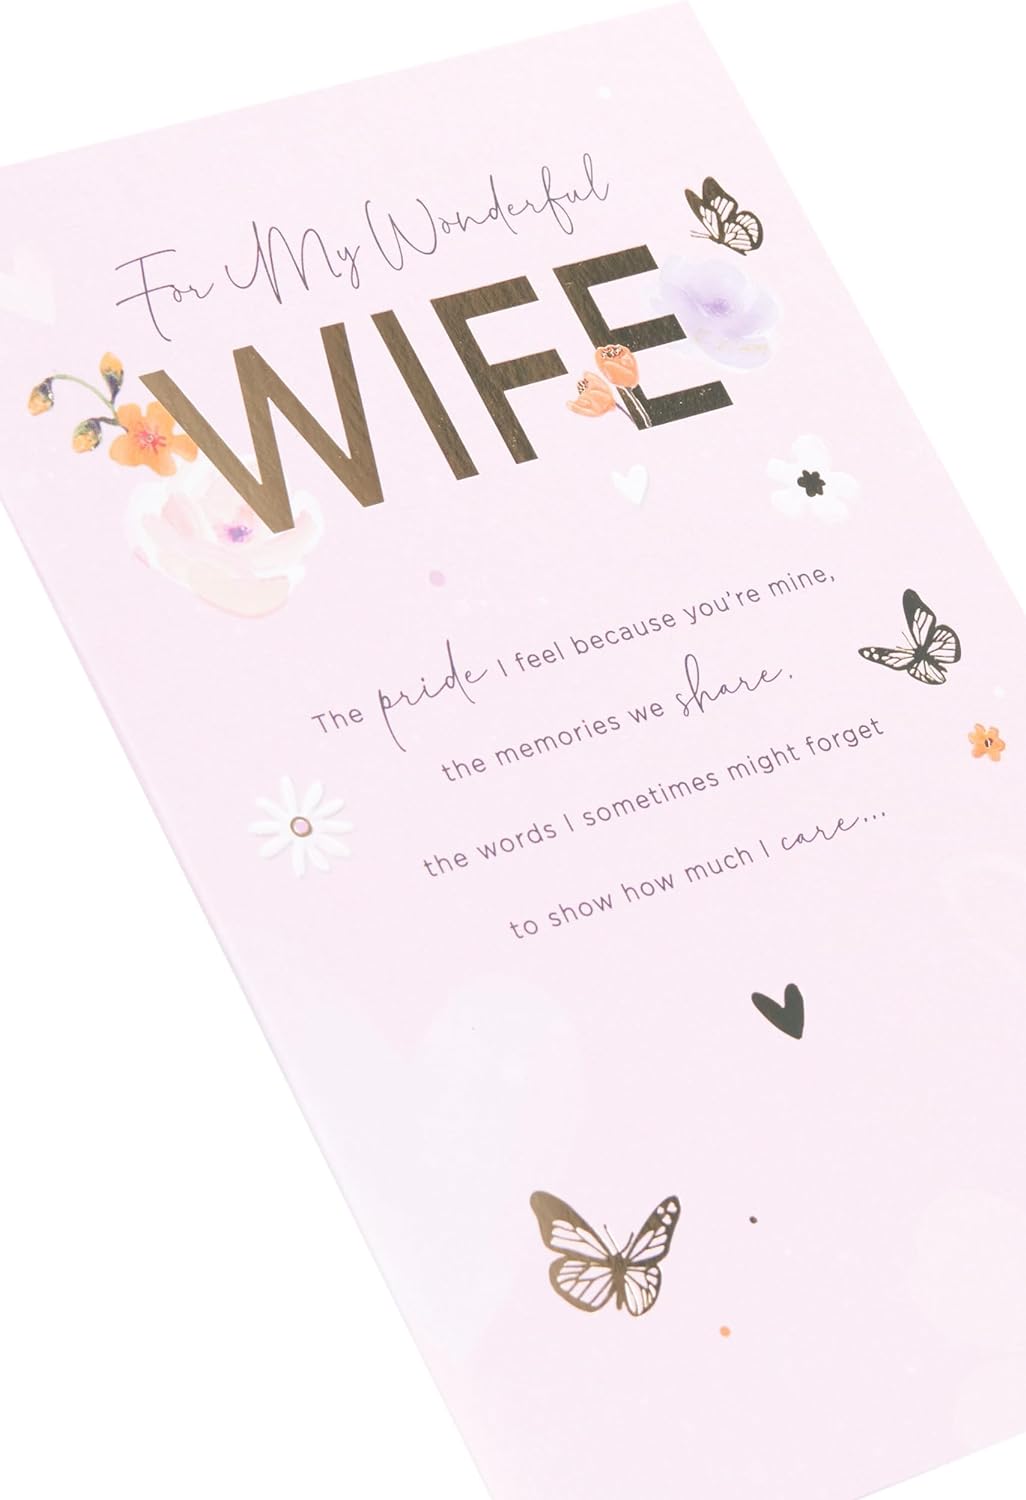 Pink & Gold Design Wife Birthday Card